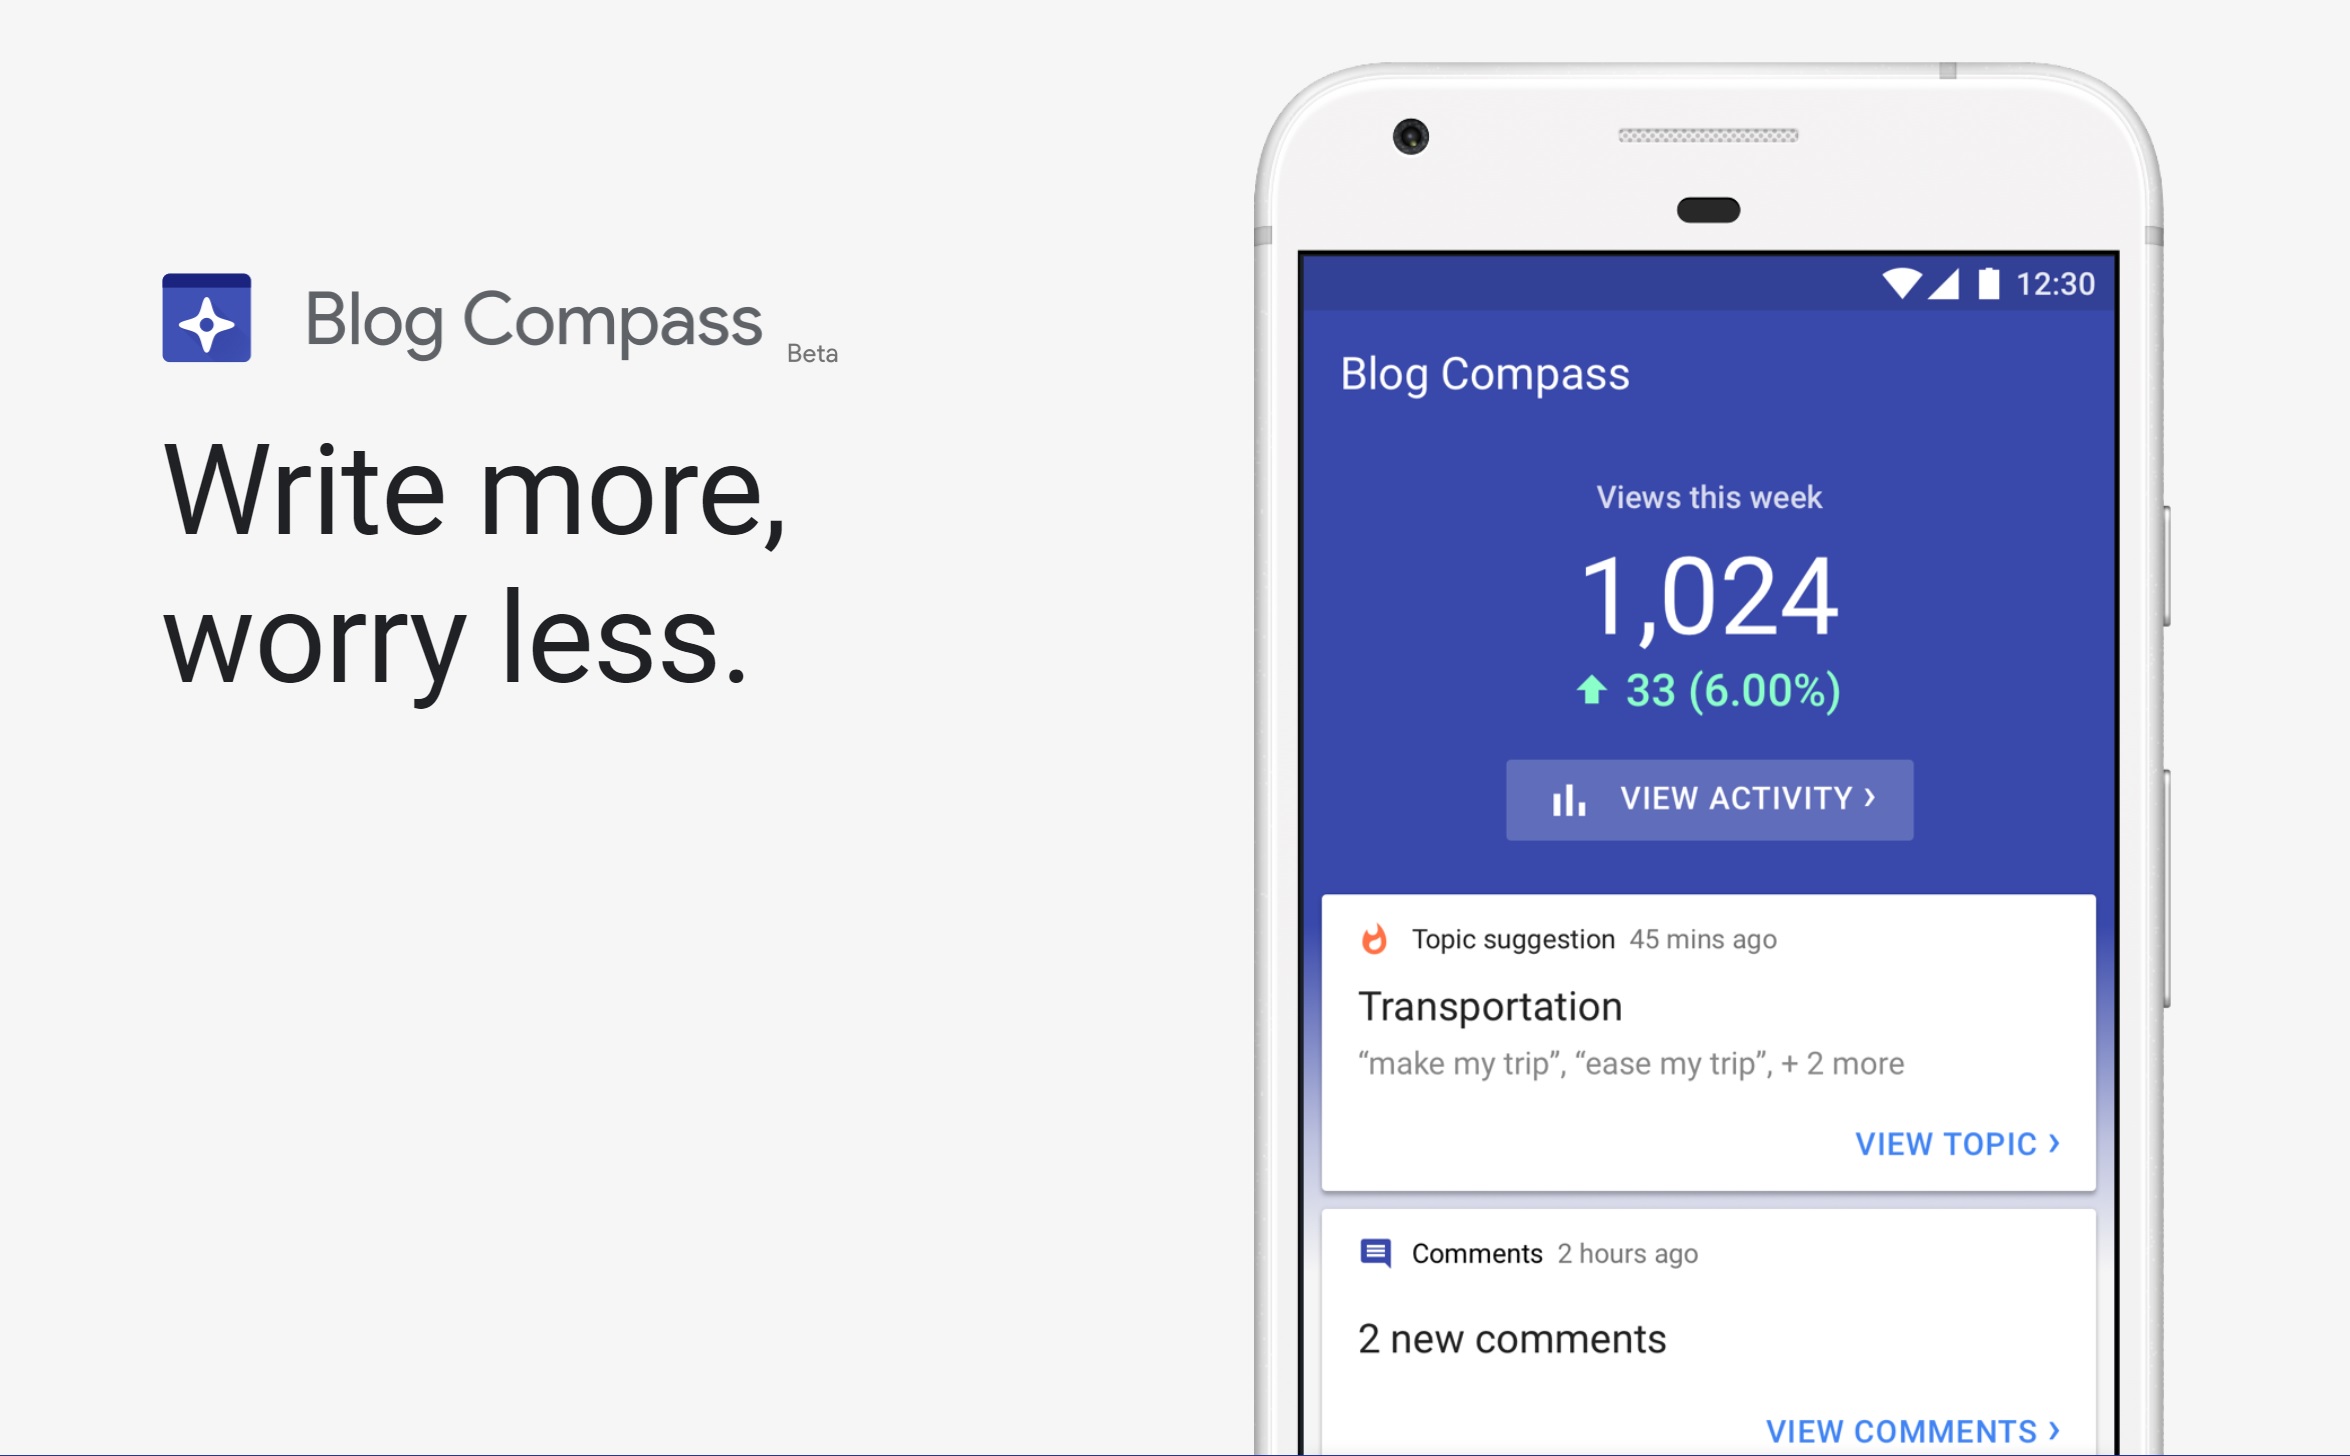 Google Blog Compass app promo image from the Google Blog. 